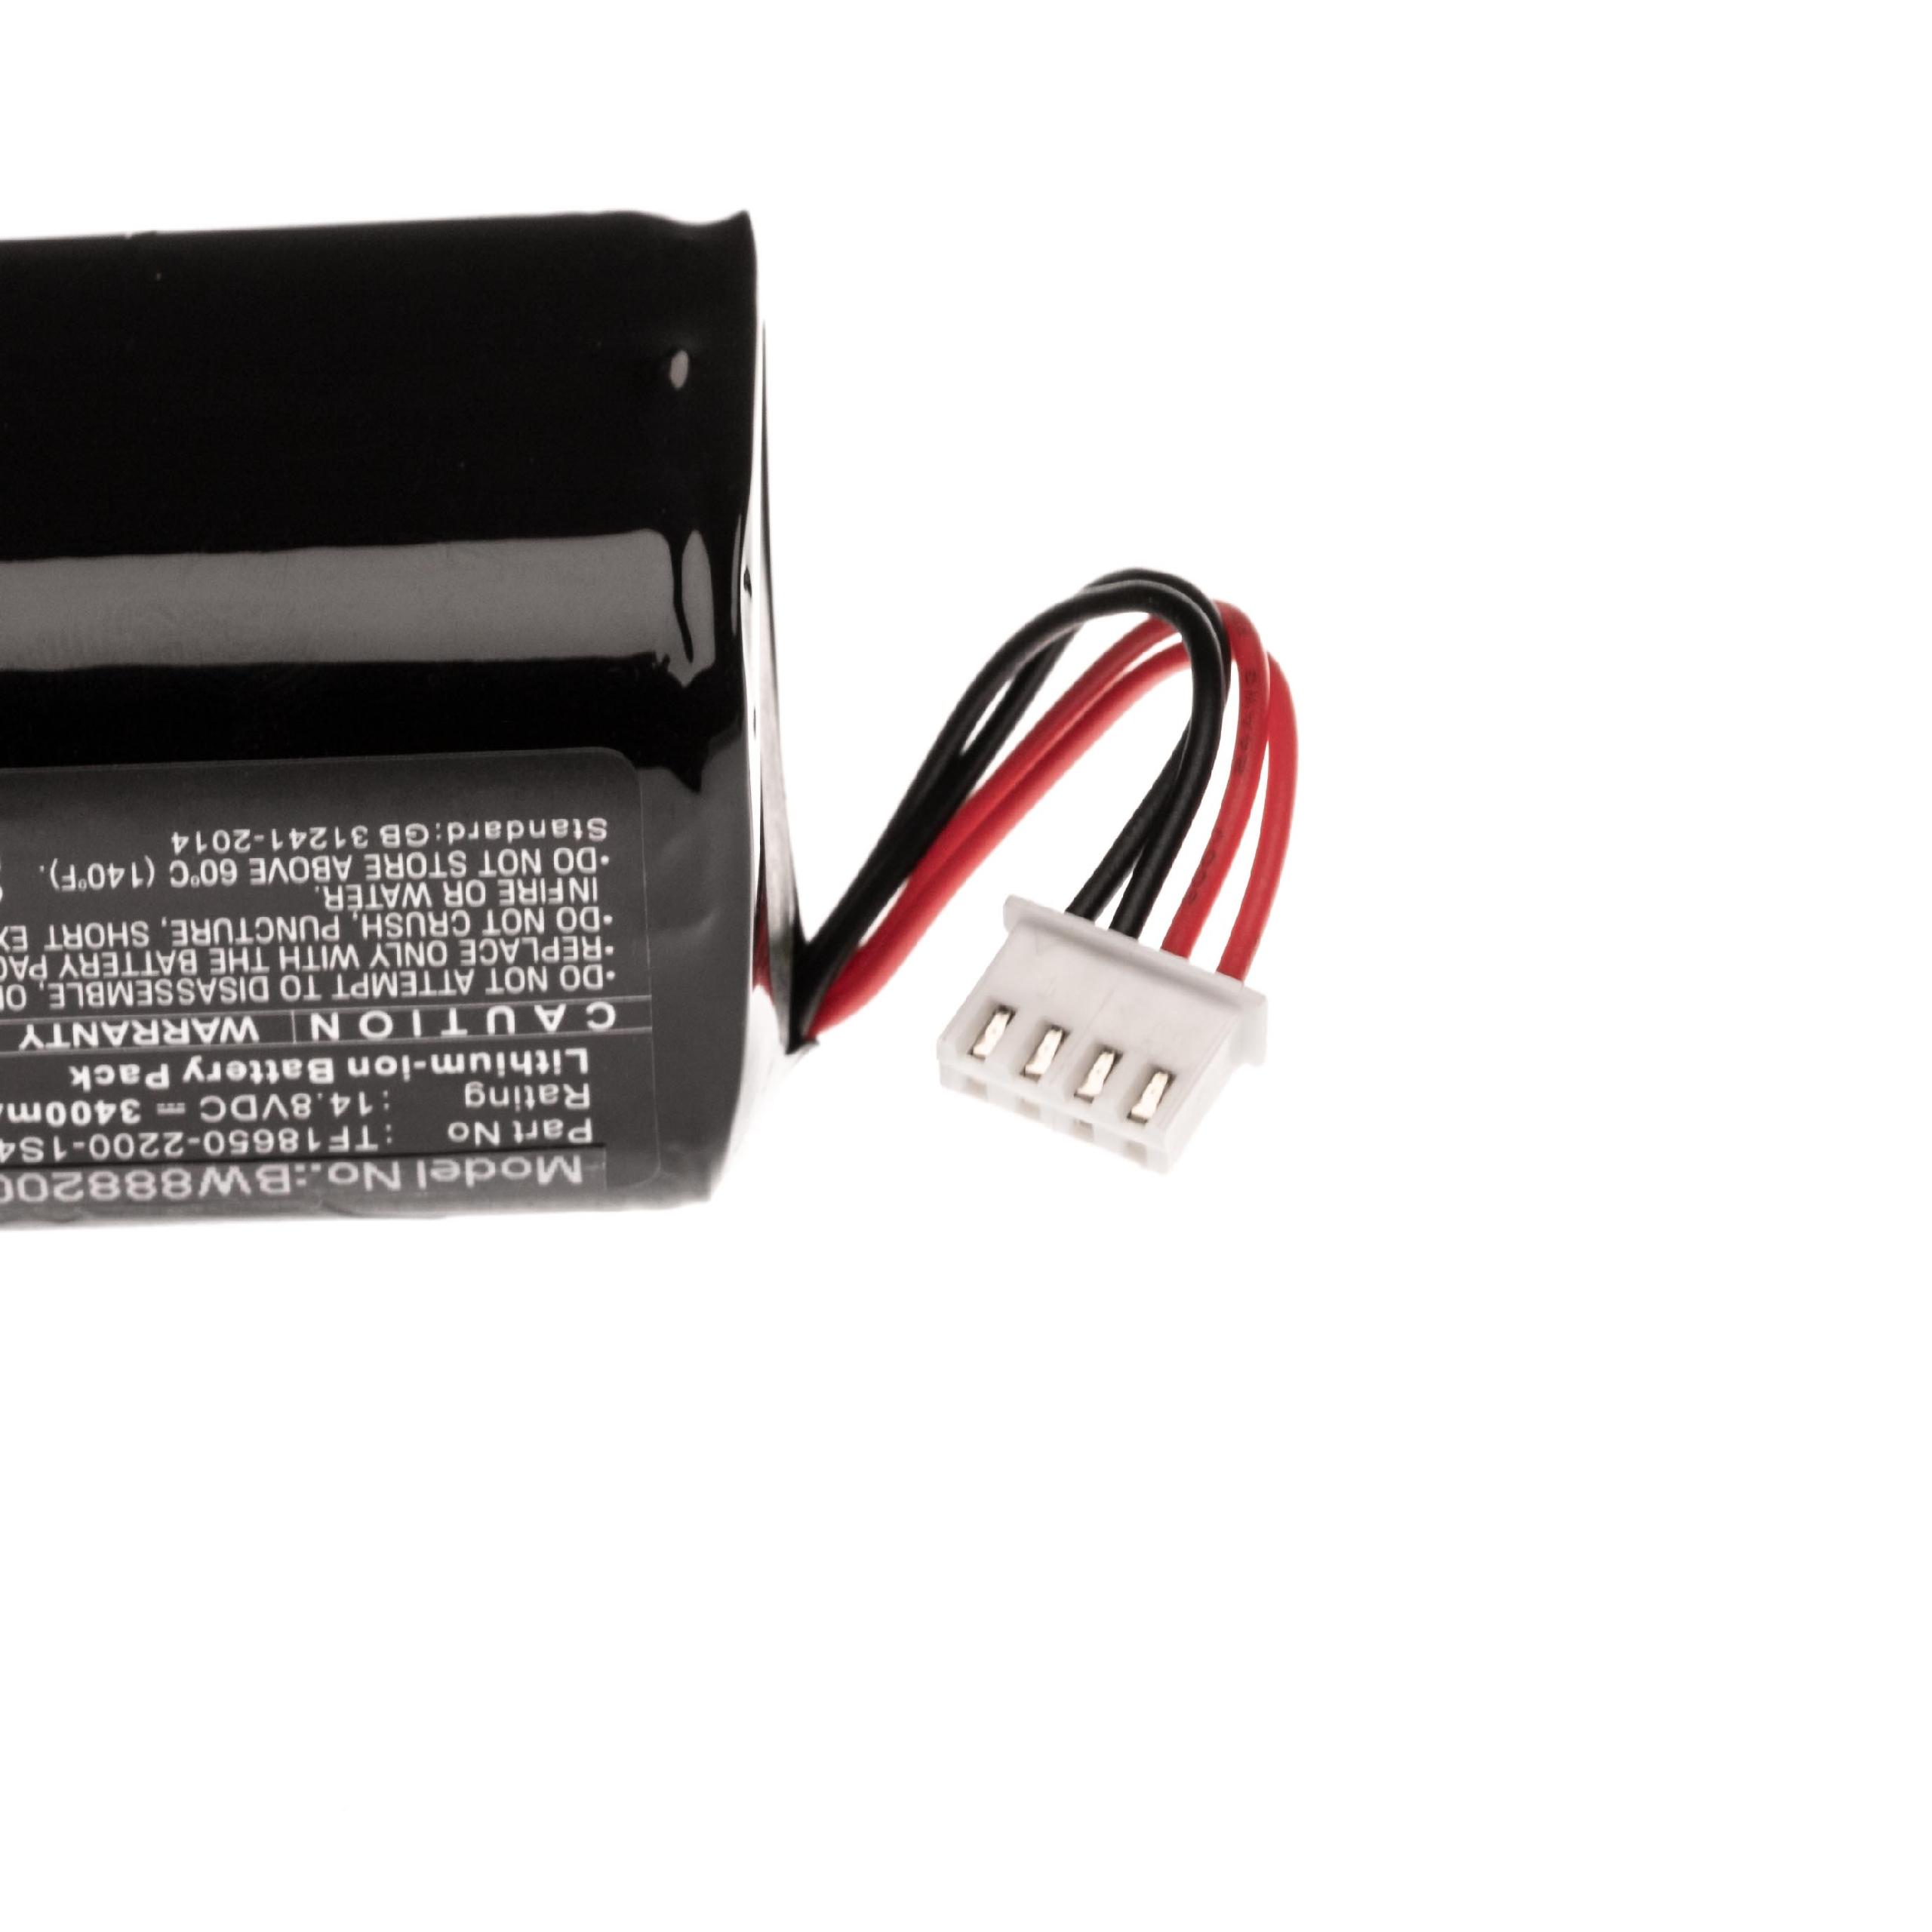 Batería reemplaza Audio Pro TF18650-2200-1S4PB para altavoces Audio Pro - 3400 mAh 14,8 V Li-Ion